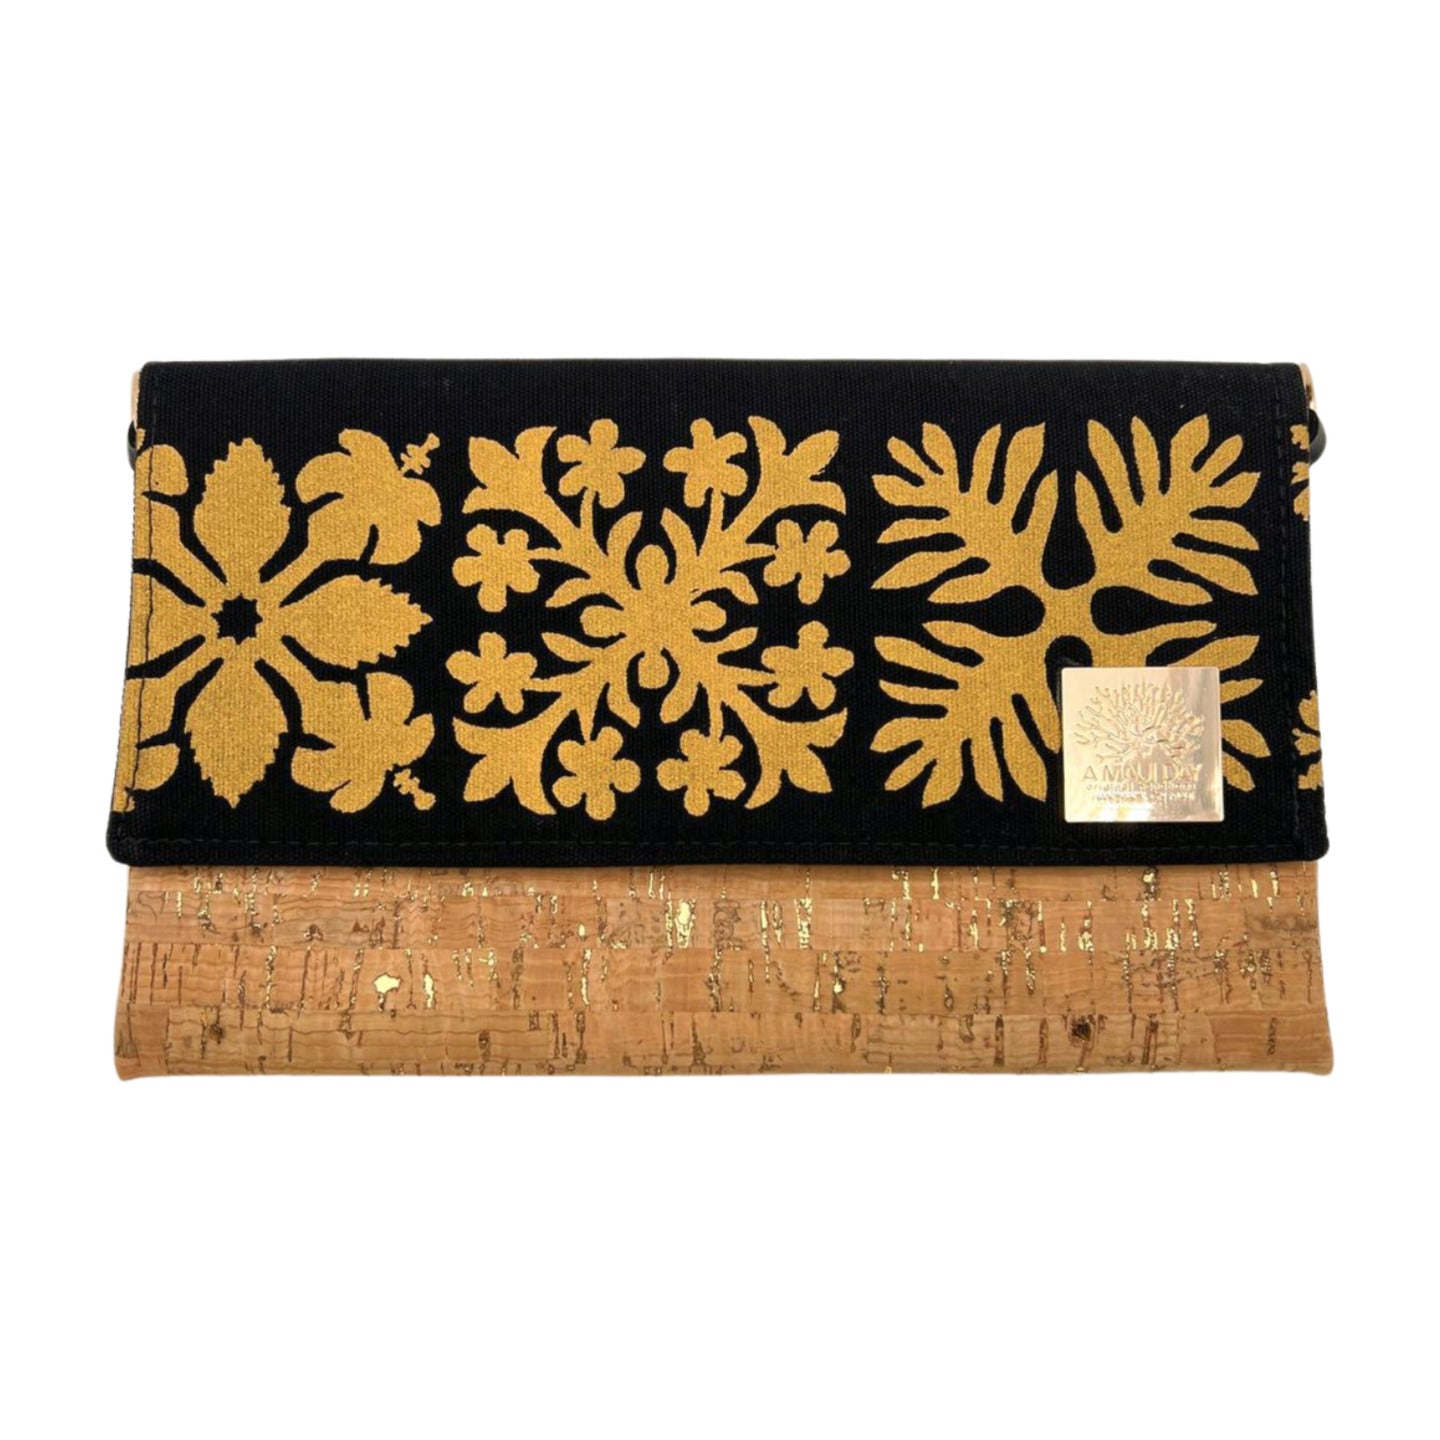 Pop-Up Mākeke - A Maui Day Original Handbags - Handprinted Fold-Over Handbag - Gold Quilt on Black Canvas - Front  View